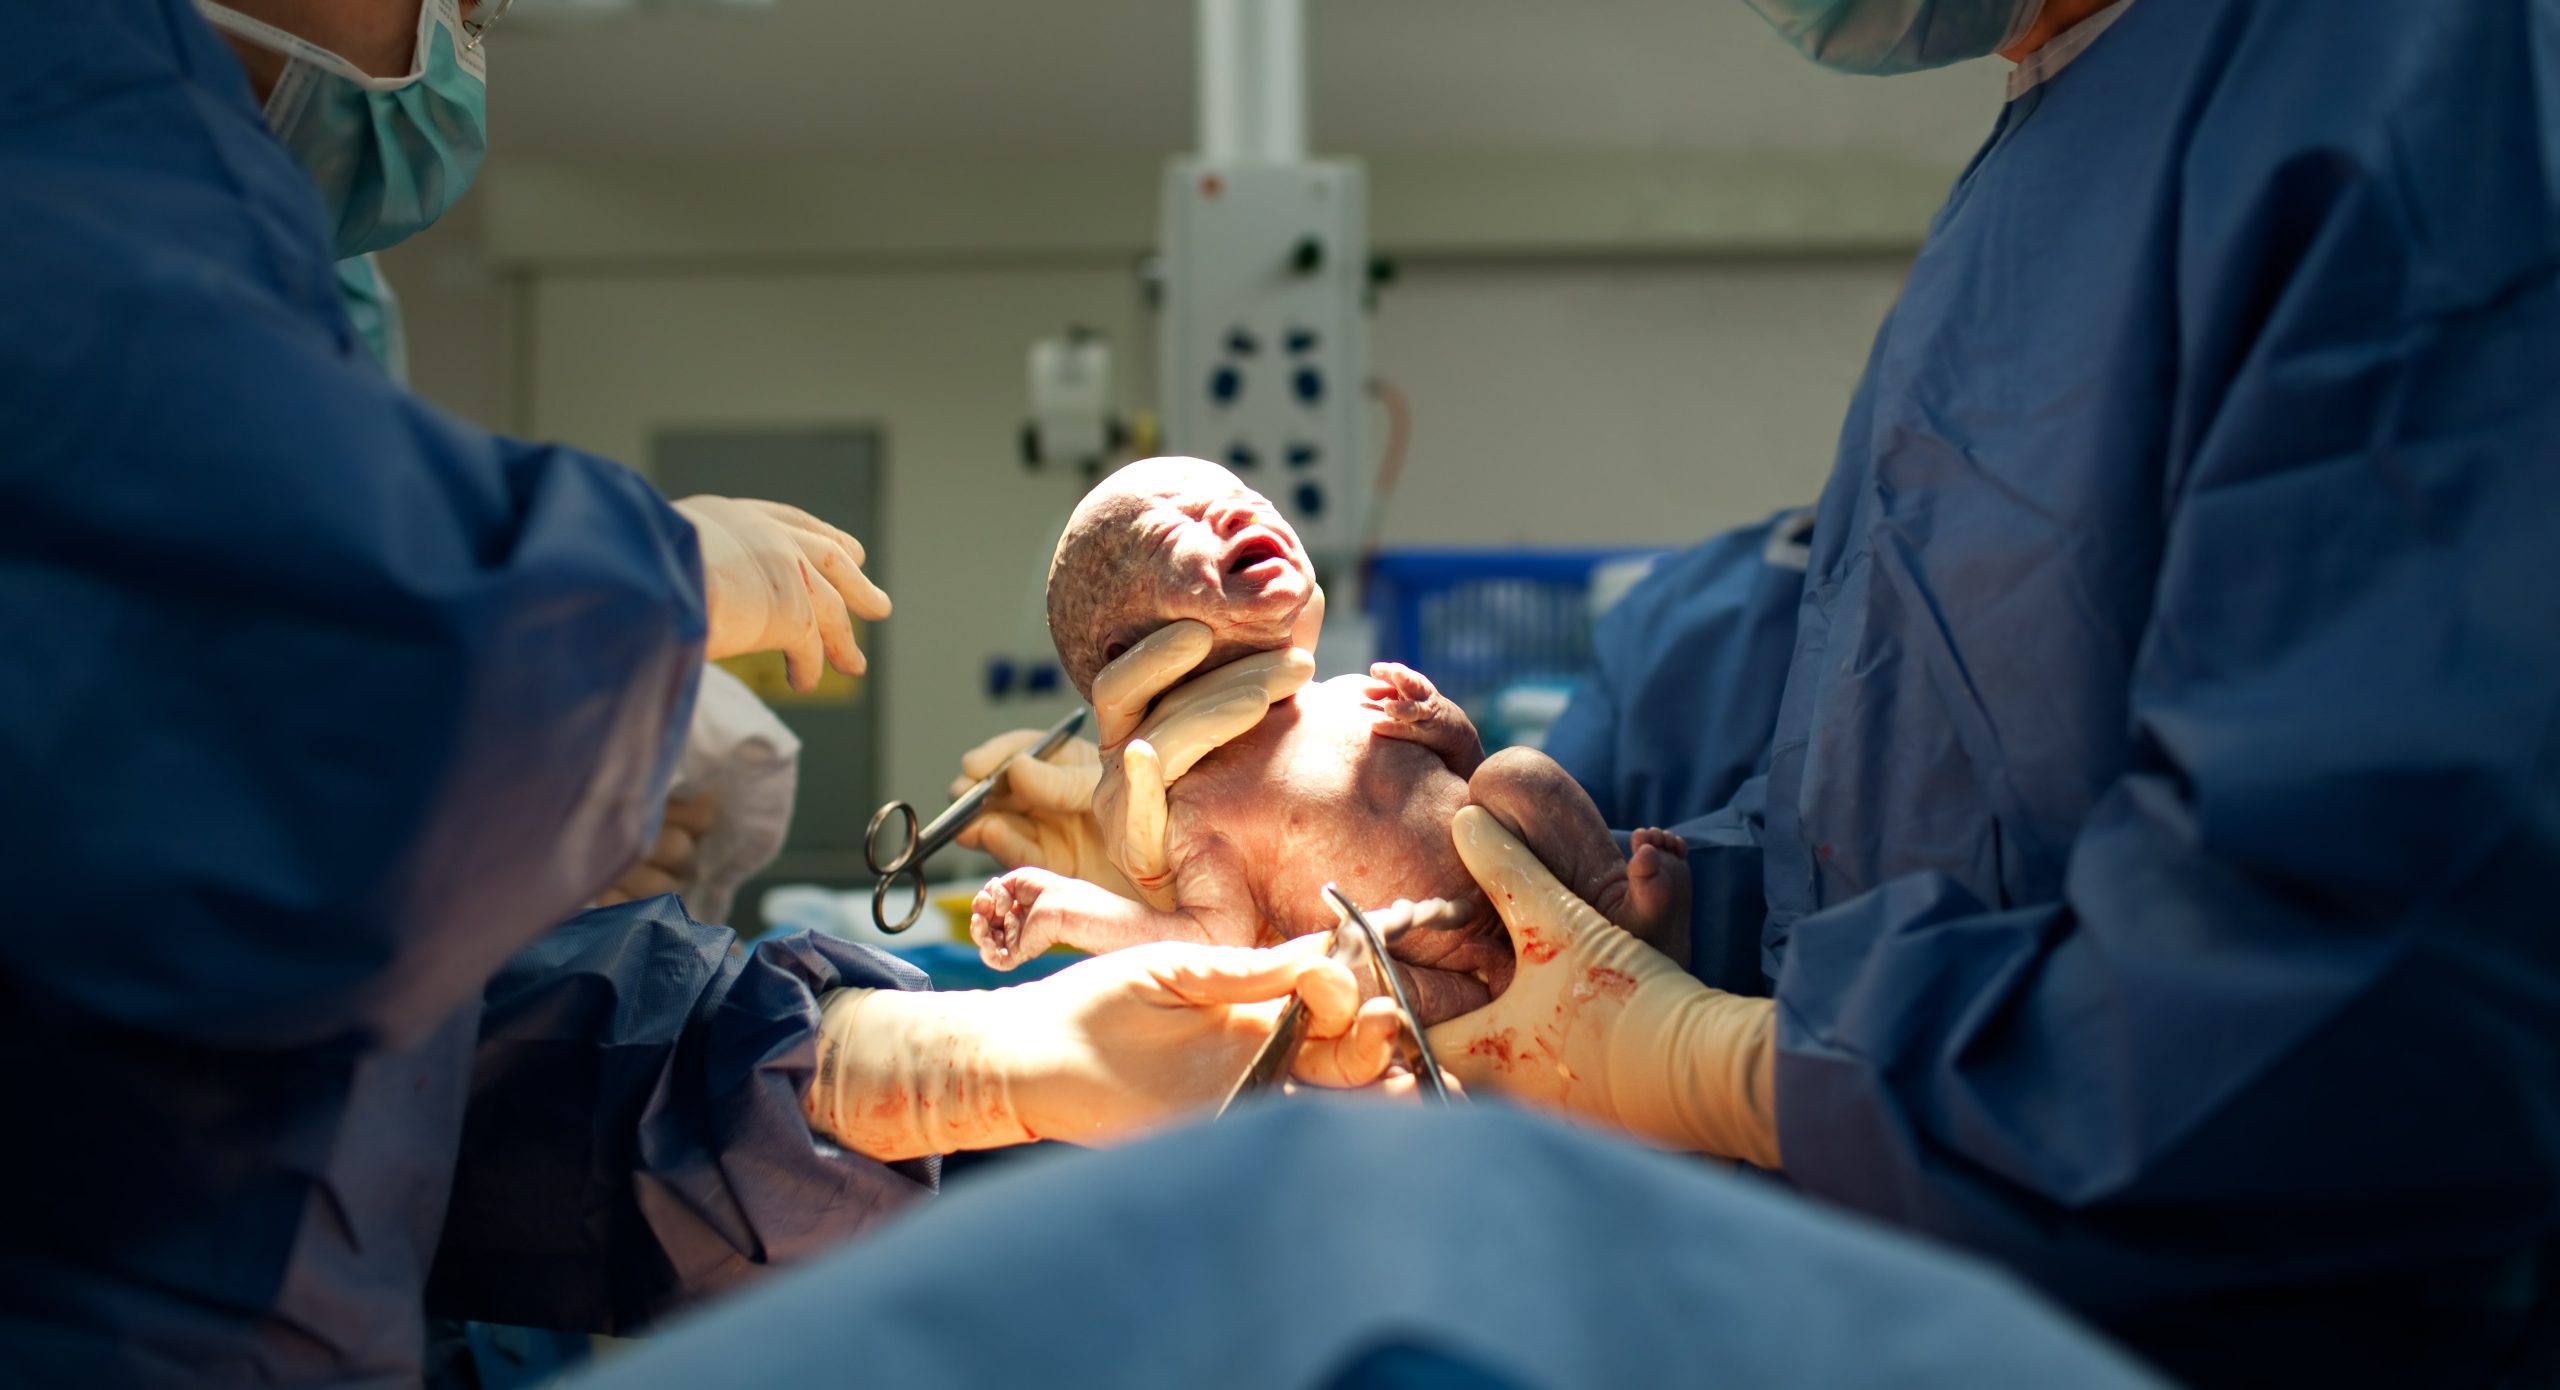 baby-being-born-via-caesarean-section-20